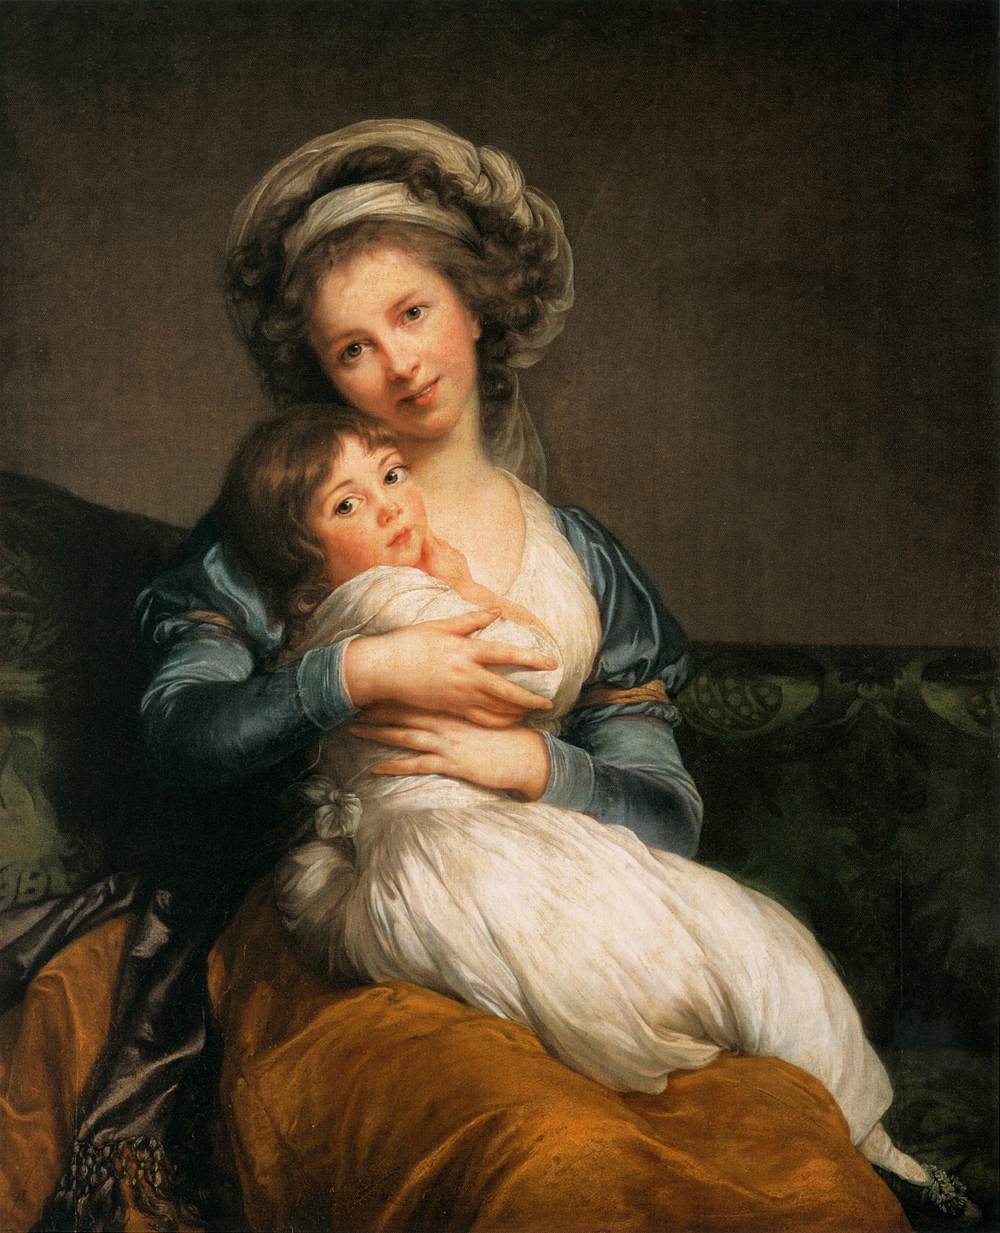 Elisabeth Vigée Lebrun, Self-Portrait with her Daughter, Julie, 1786, oil on panel, Musée du Louvre